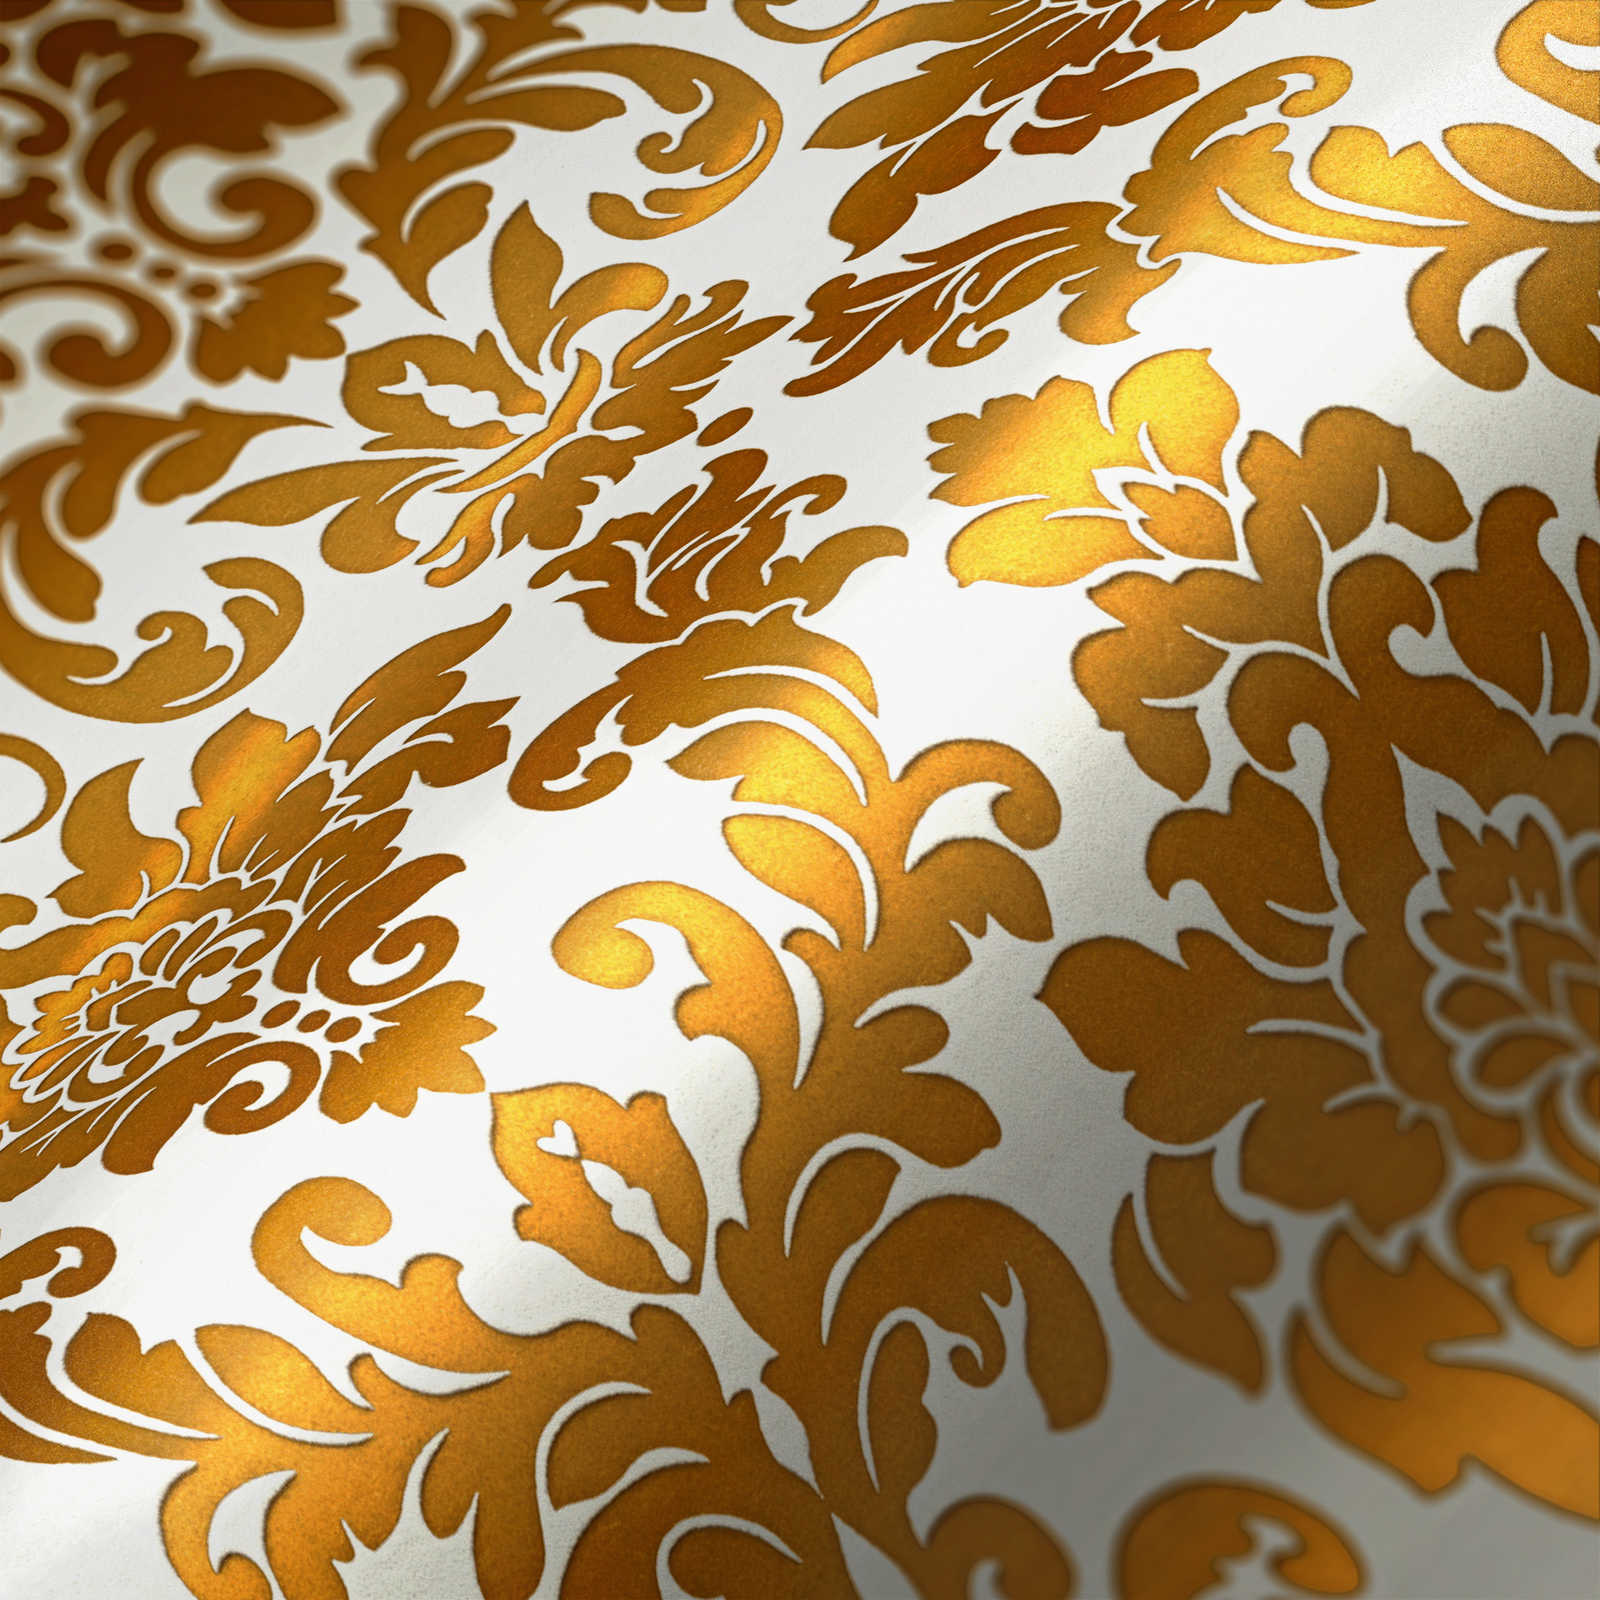             Golden wallpaper with baroque ornament - metallic, white
        